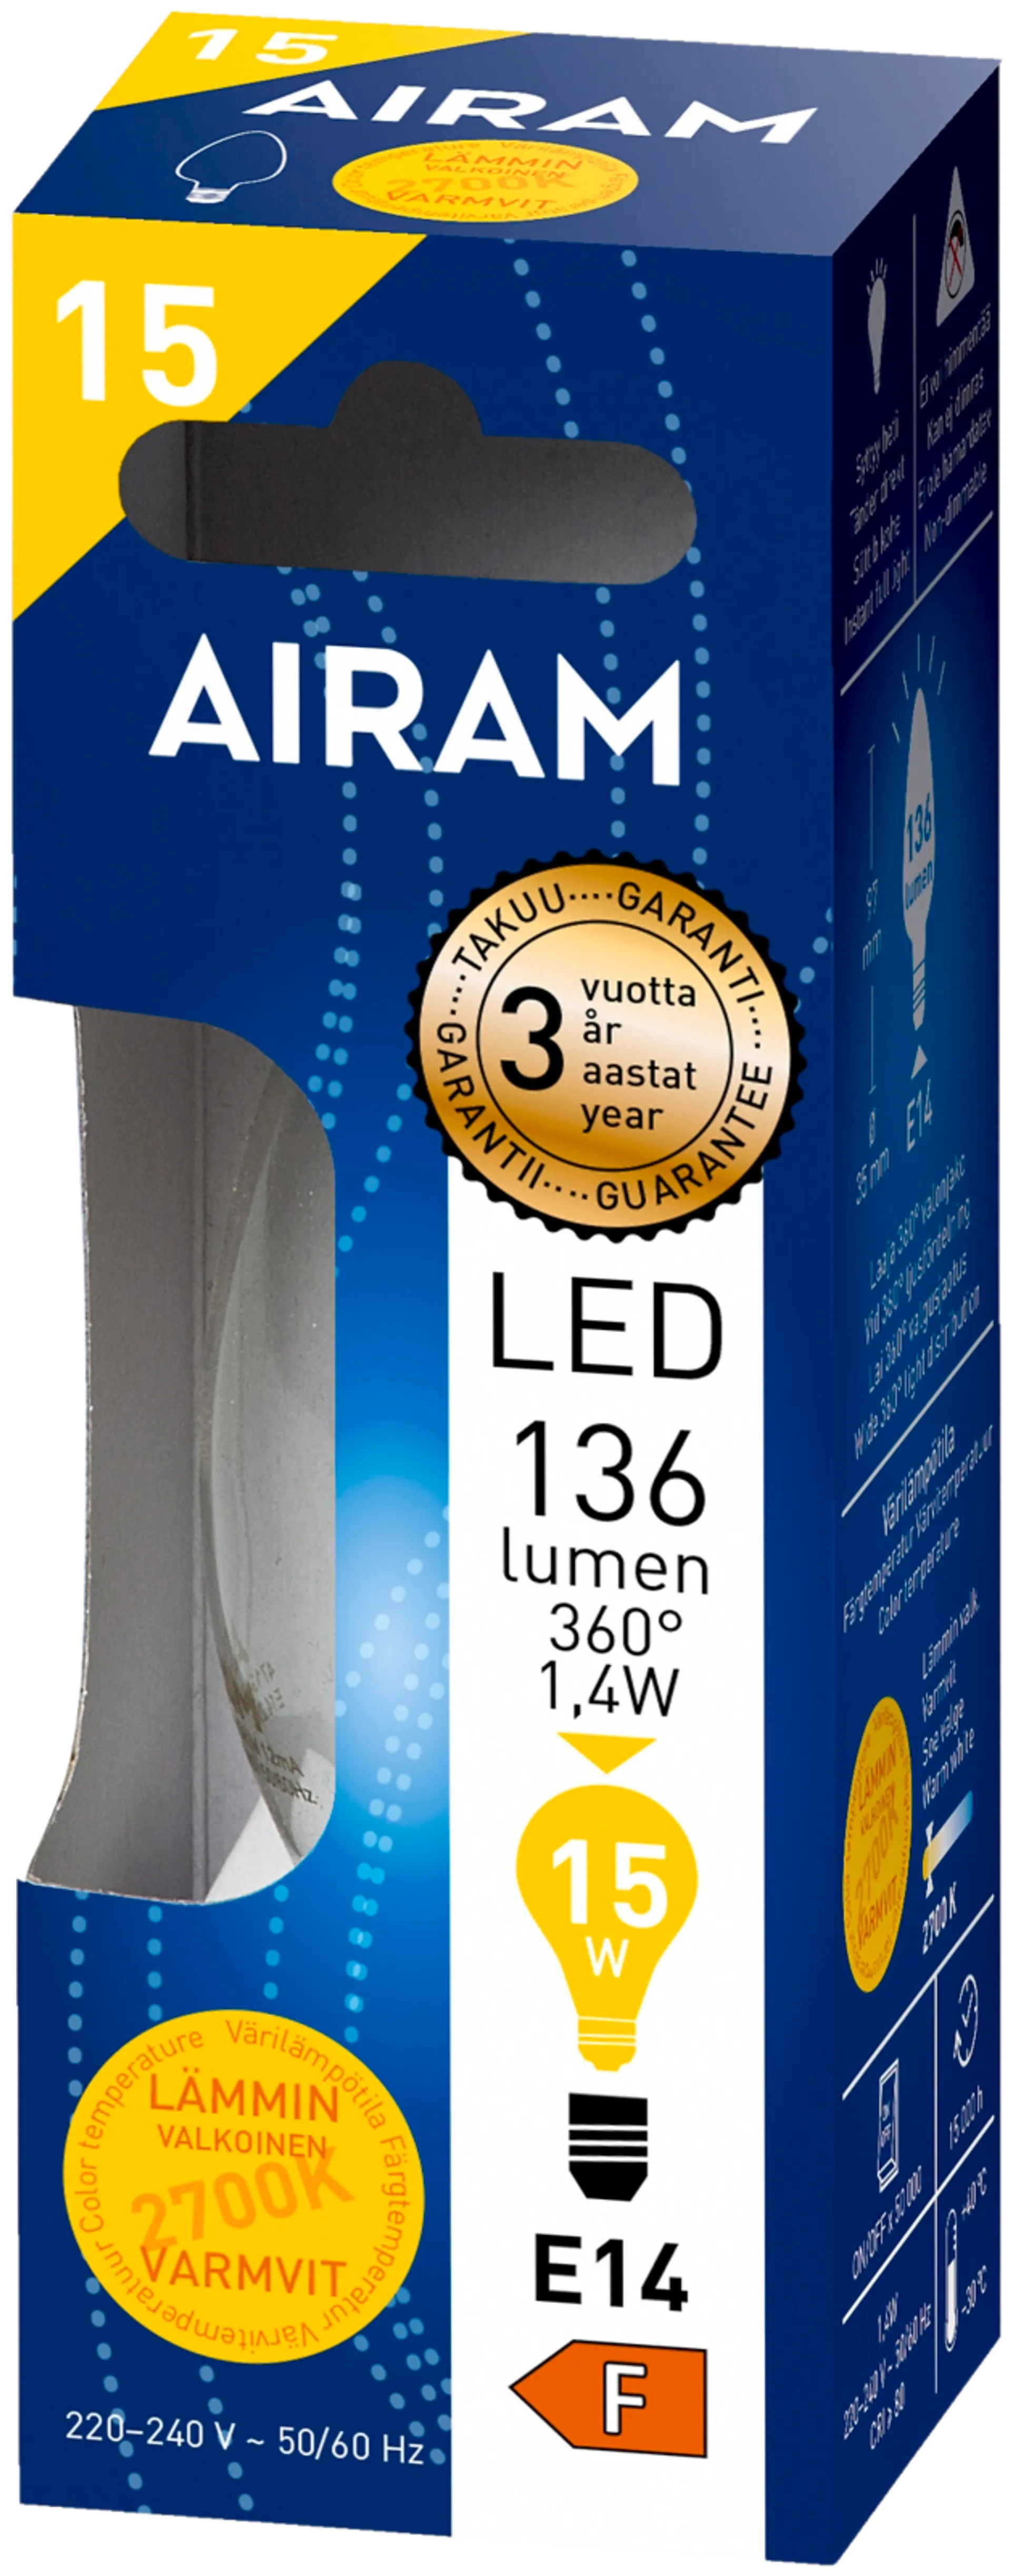 Airam LED kynttilä 1,4W E14 136LM kirkas filamentti - 2